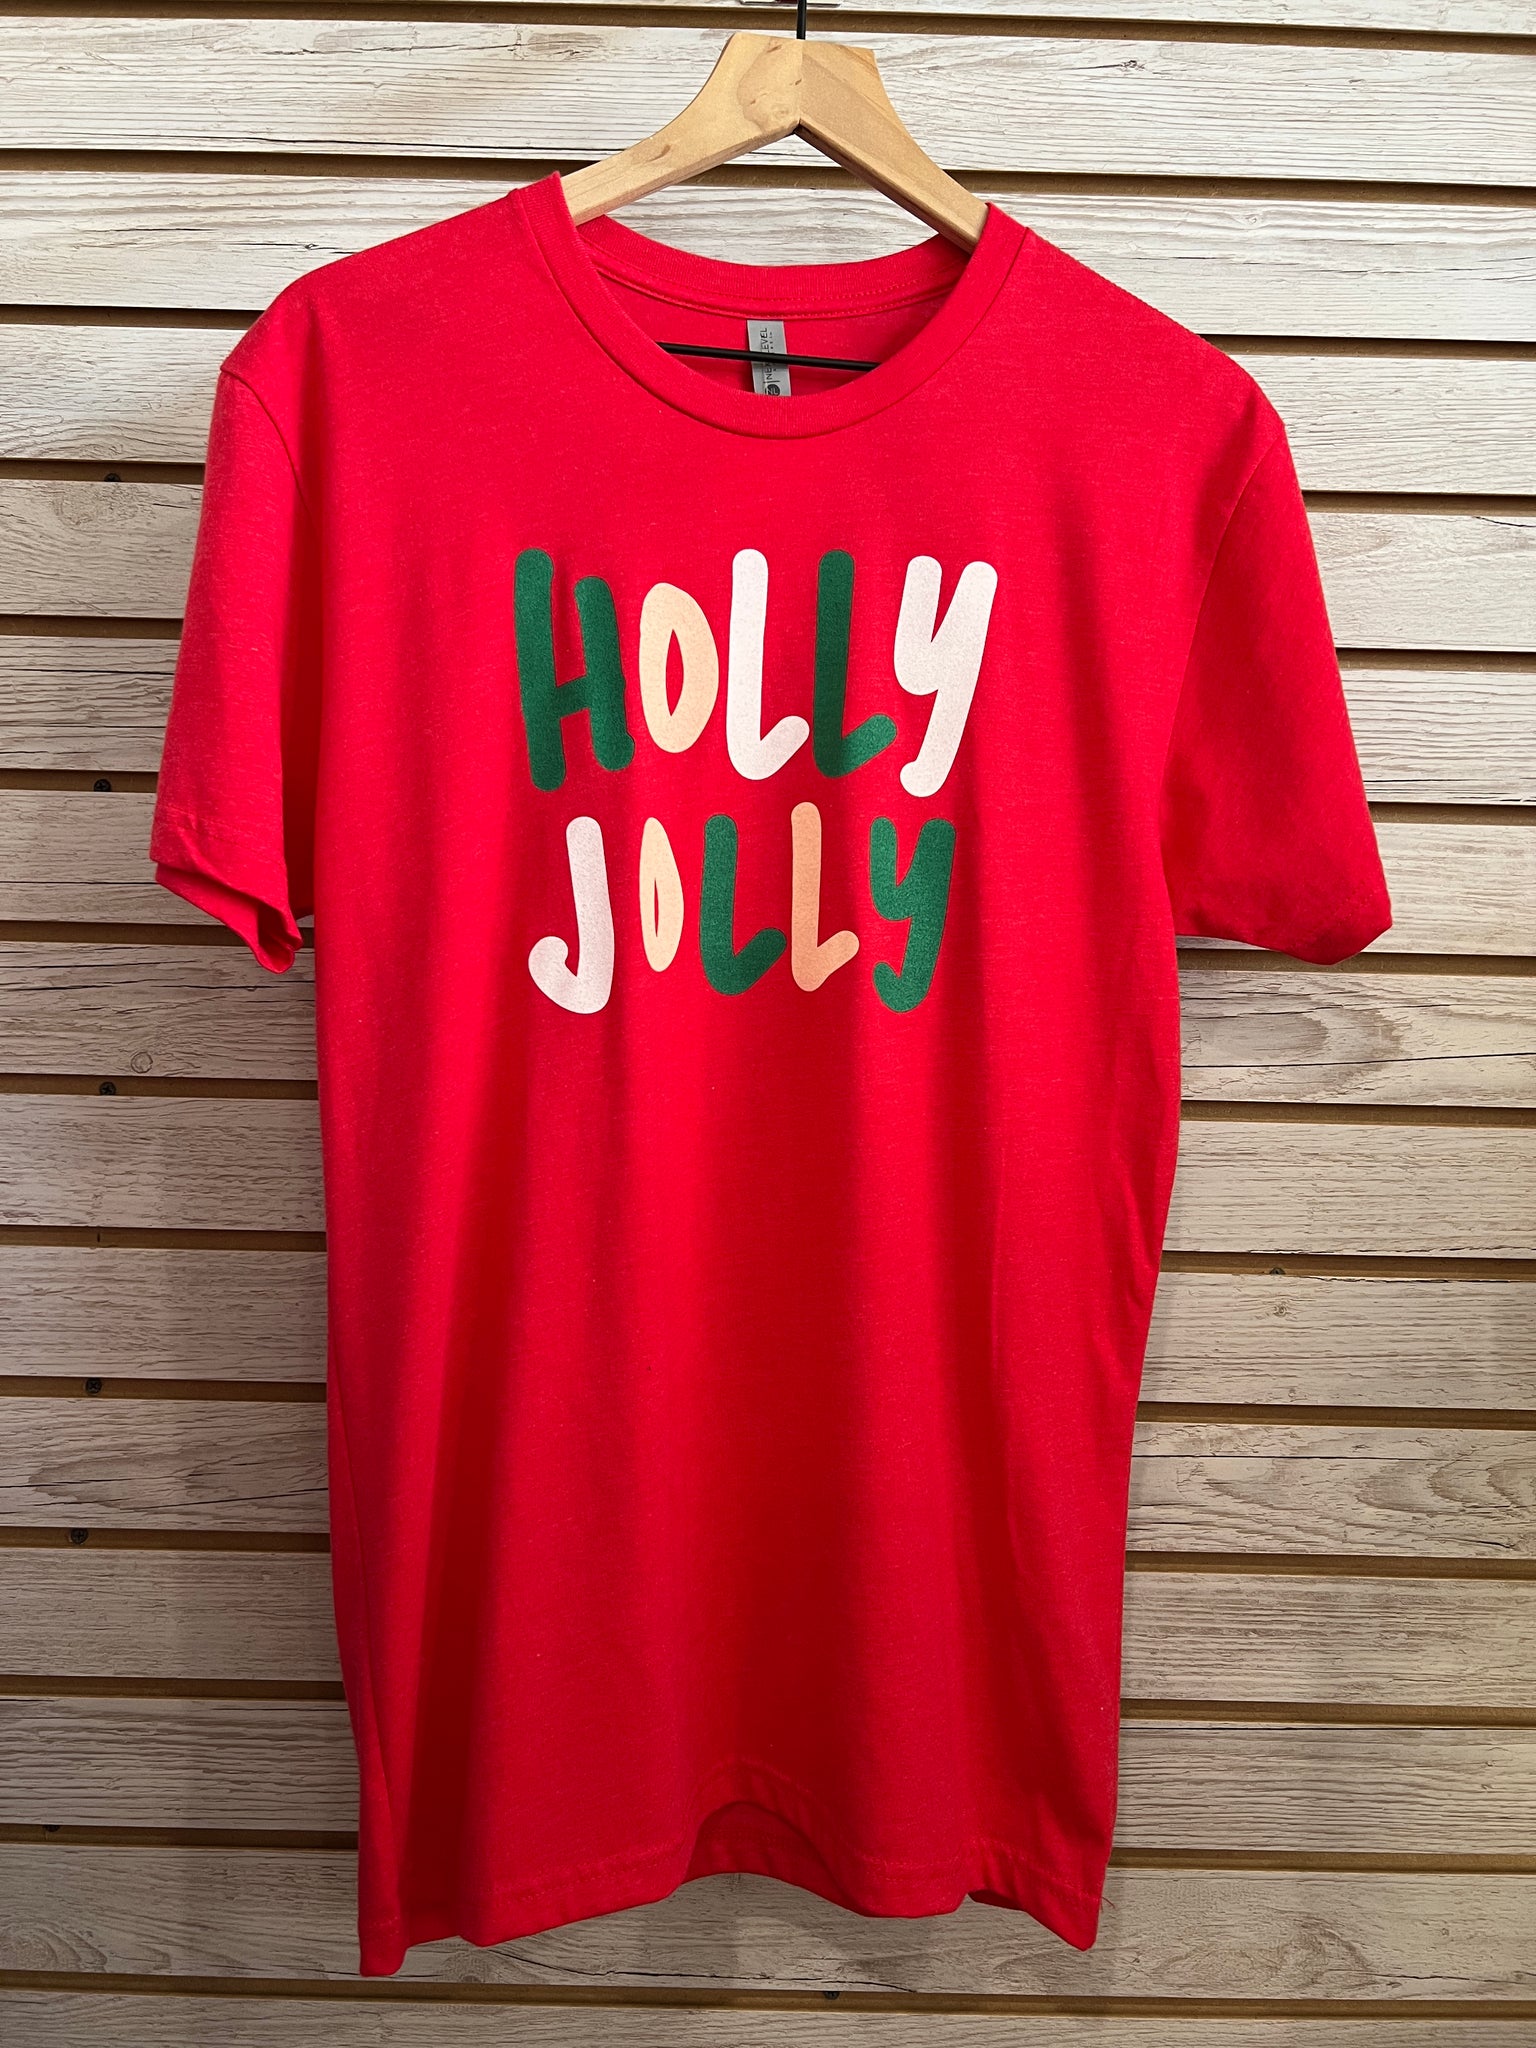 HOLLY JOLLY t-shirts